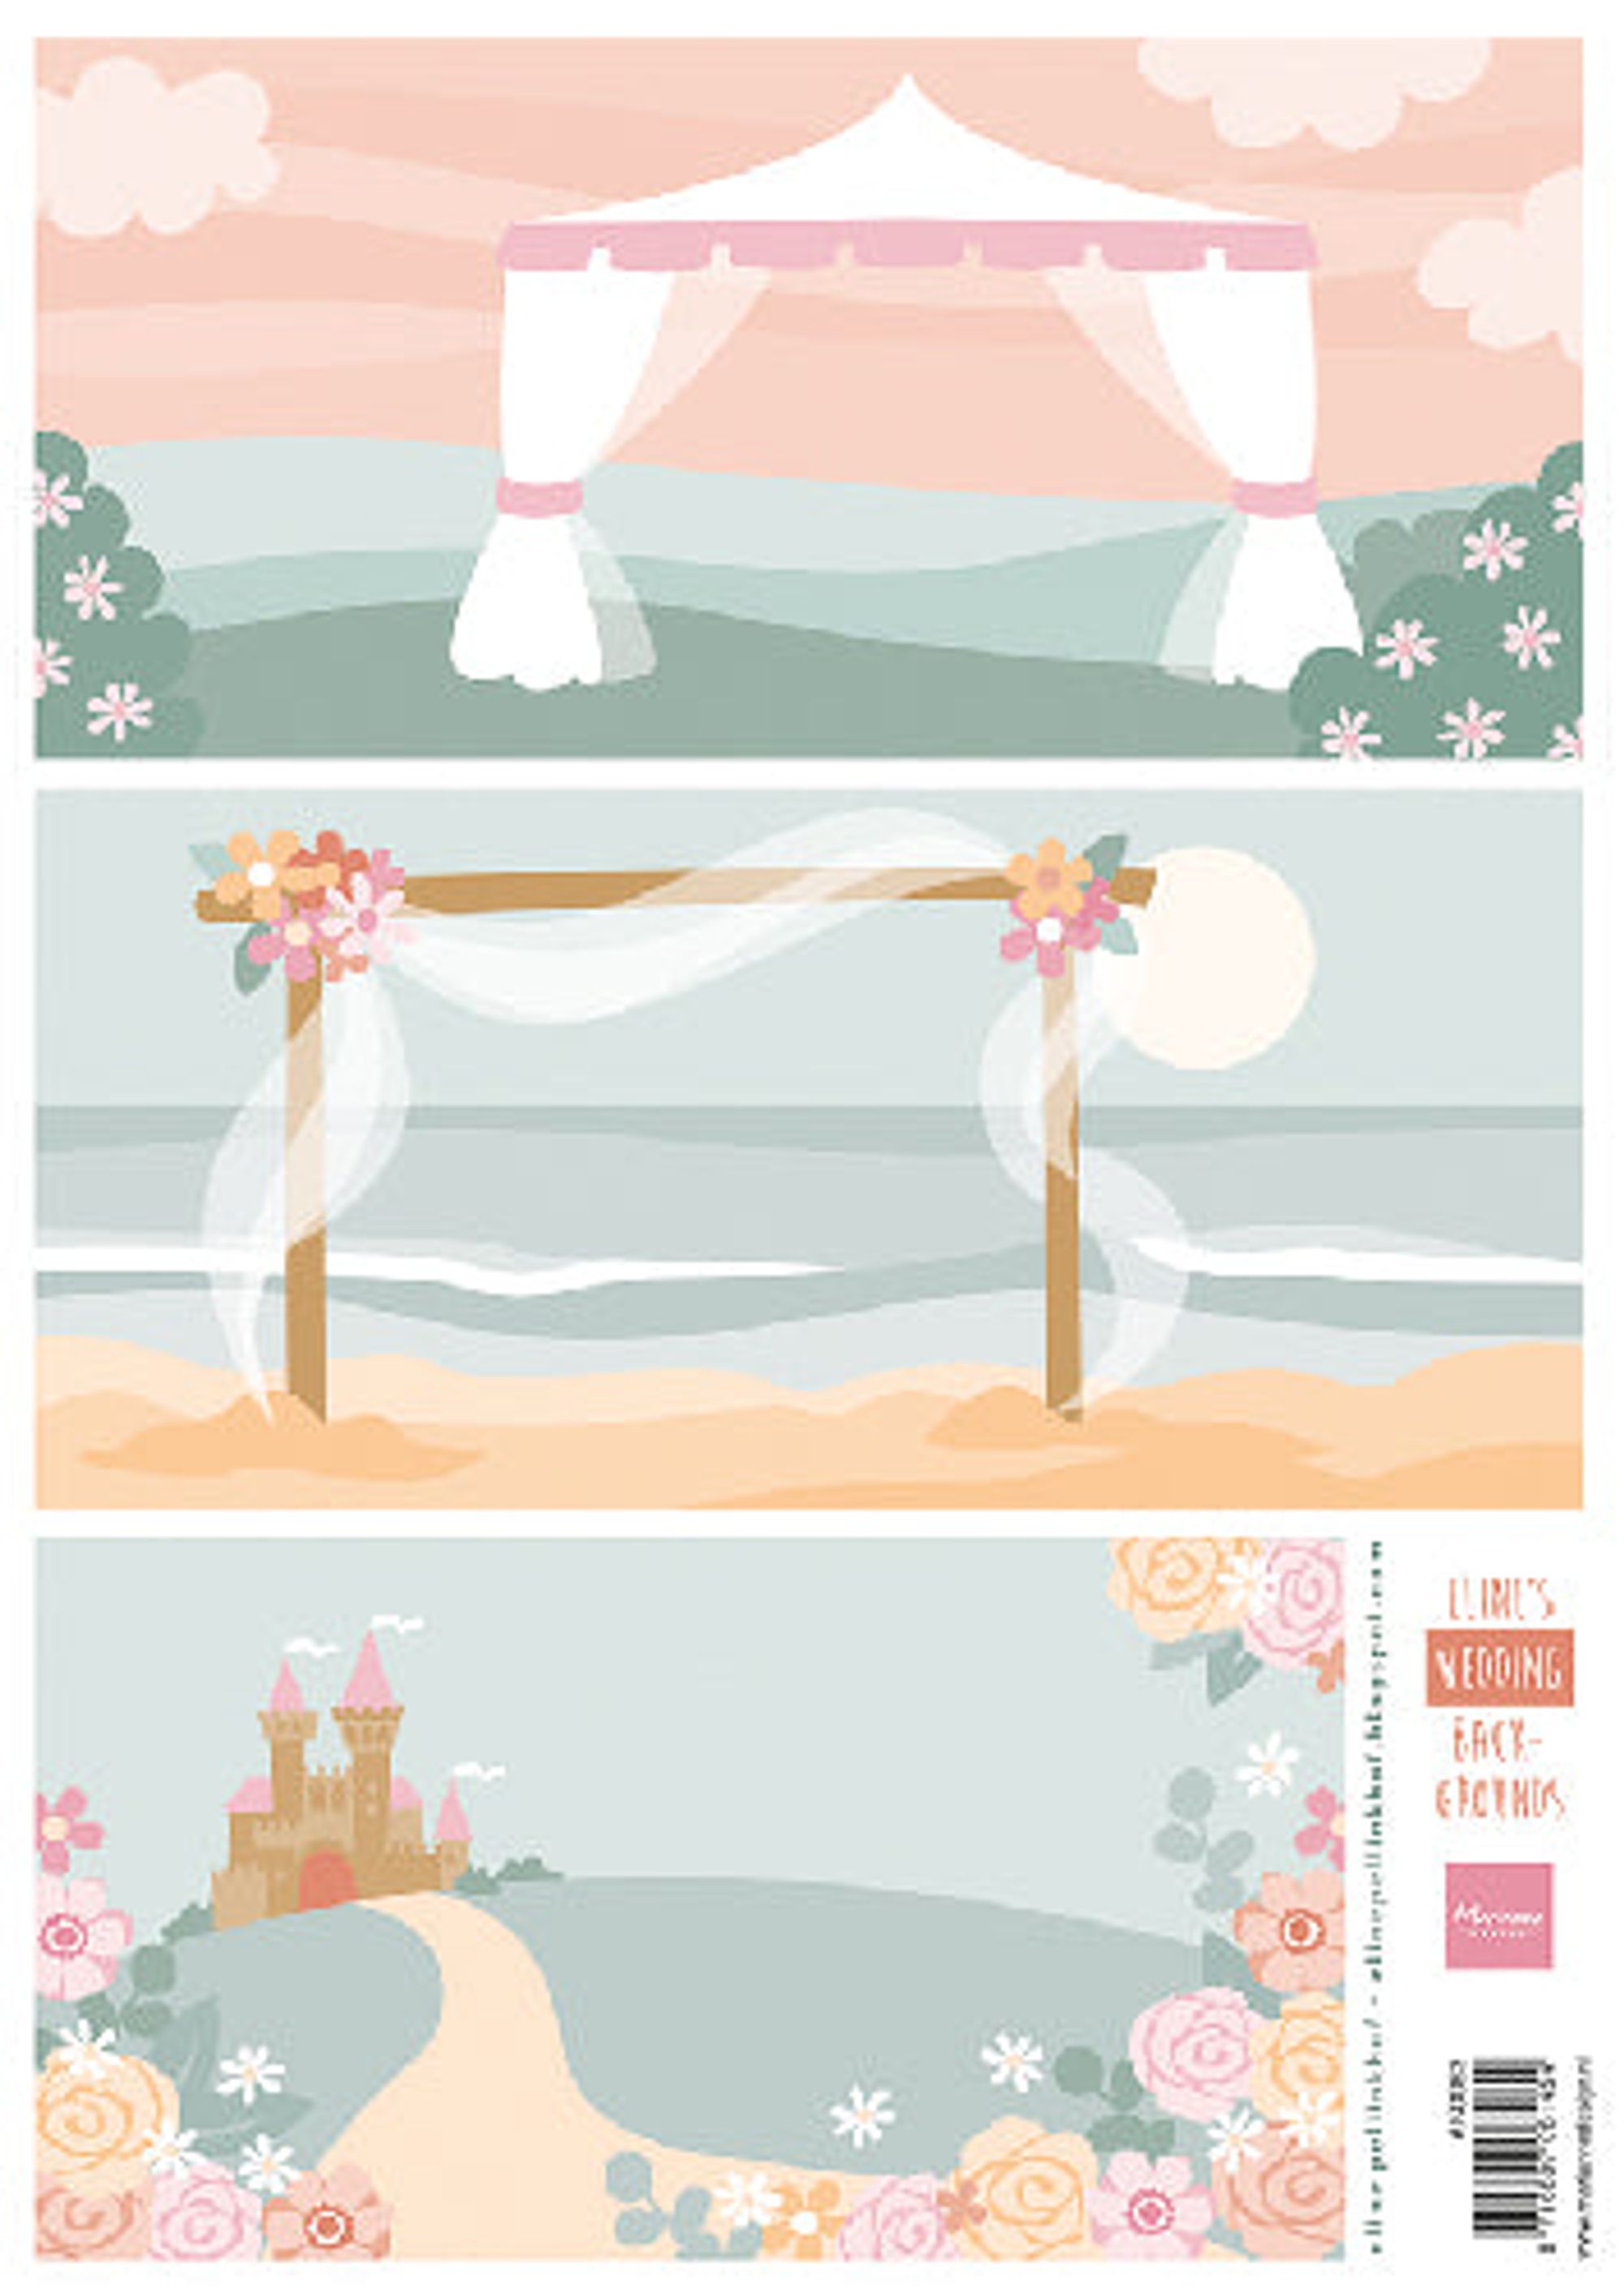 Eline's Wedding Background A4 Cutting Sheet